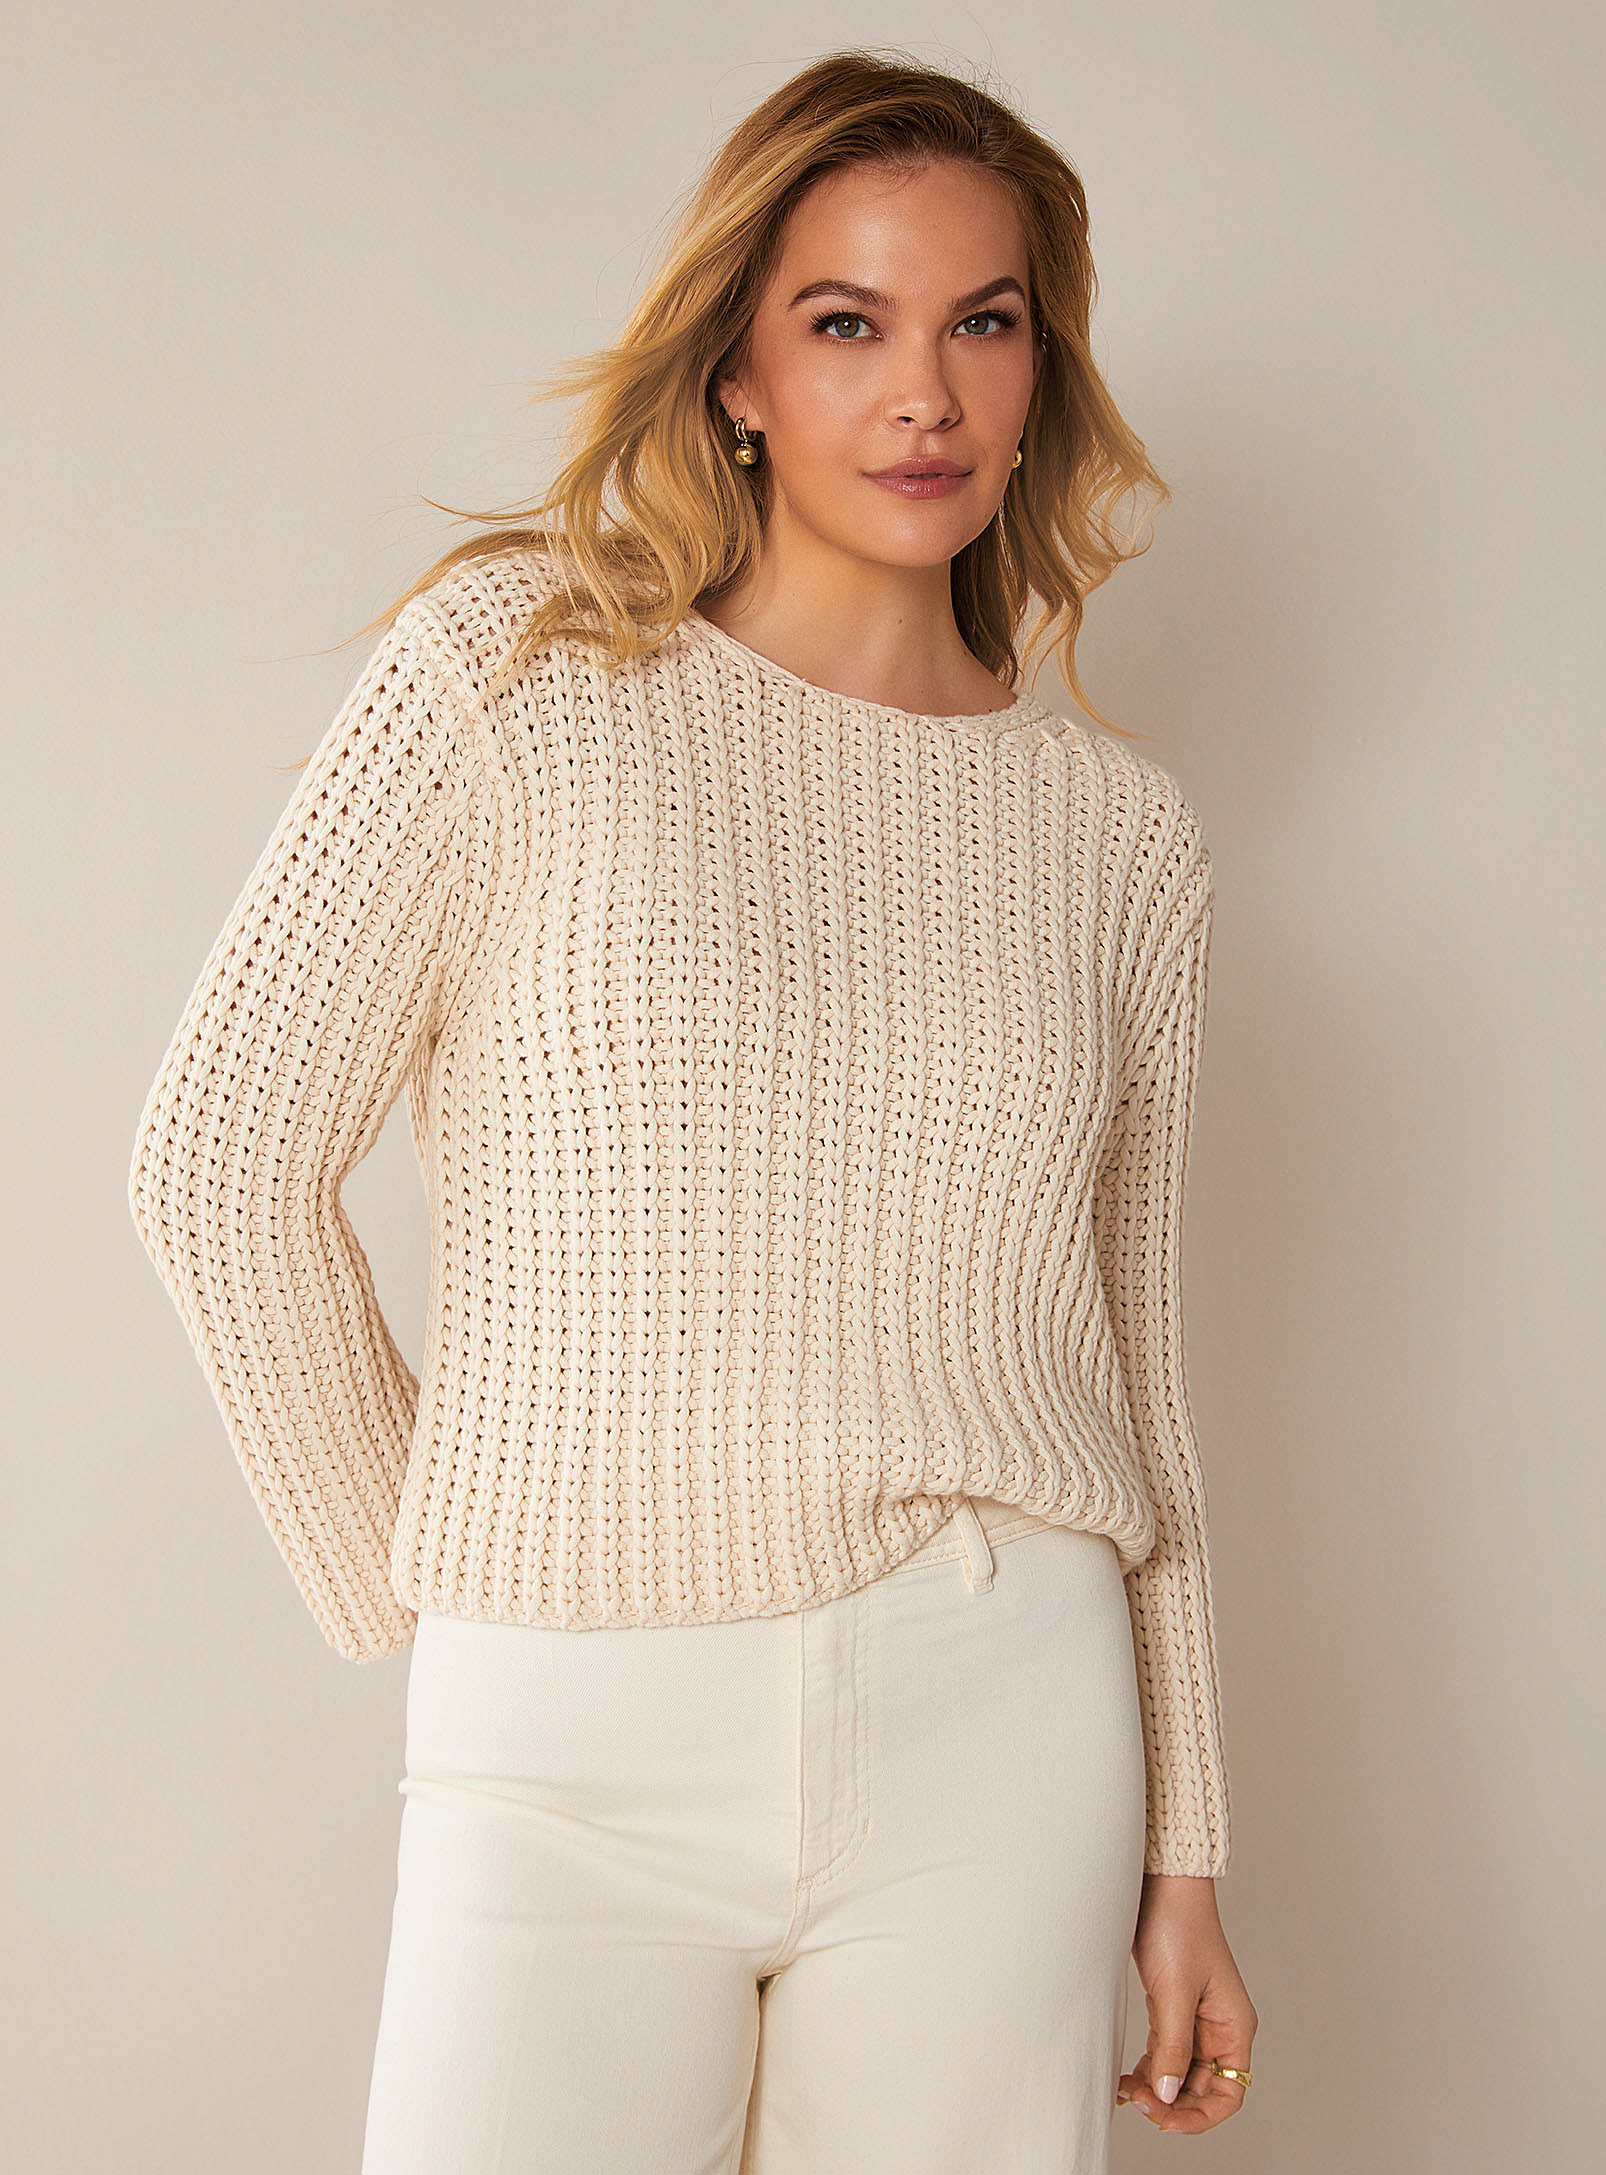 Marc O'Polo Shirt - Women's Cream wide-knit sweater